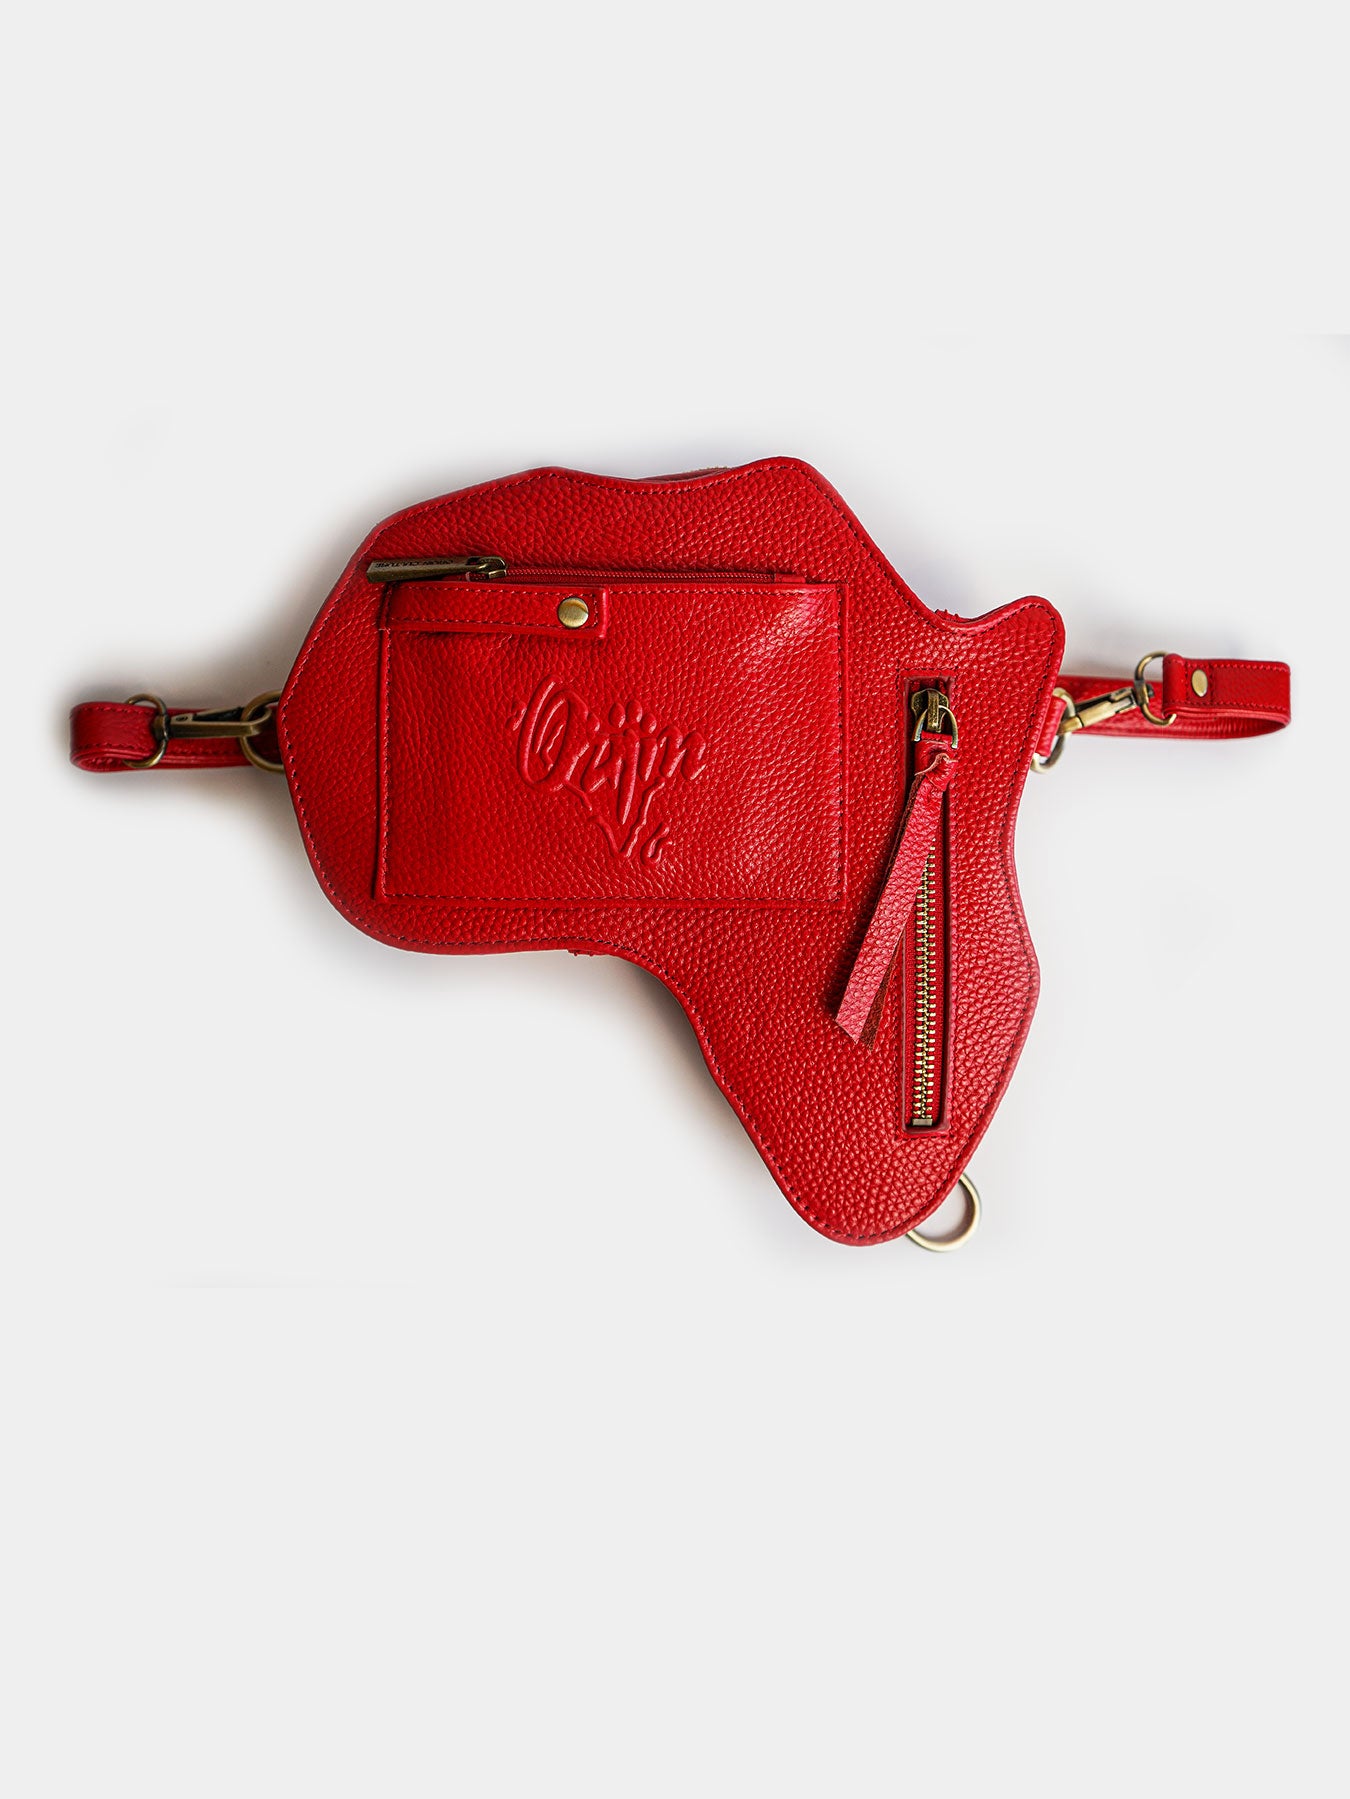 Africa Fanny Pack/ CrossBody Bag - Red Leather - SHOP | Orijin Culture 